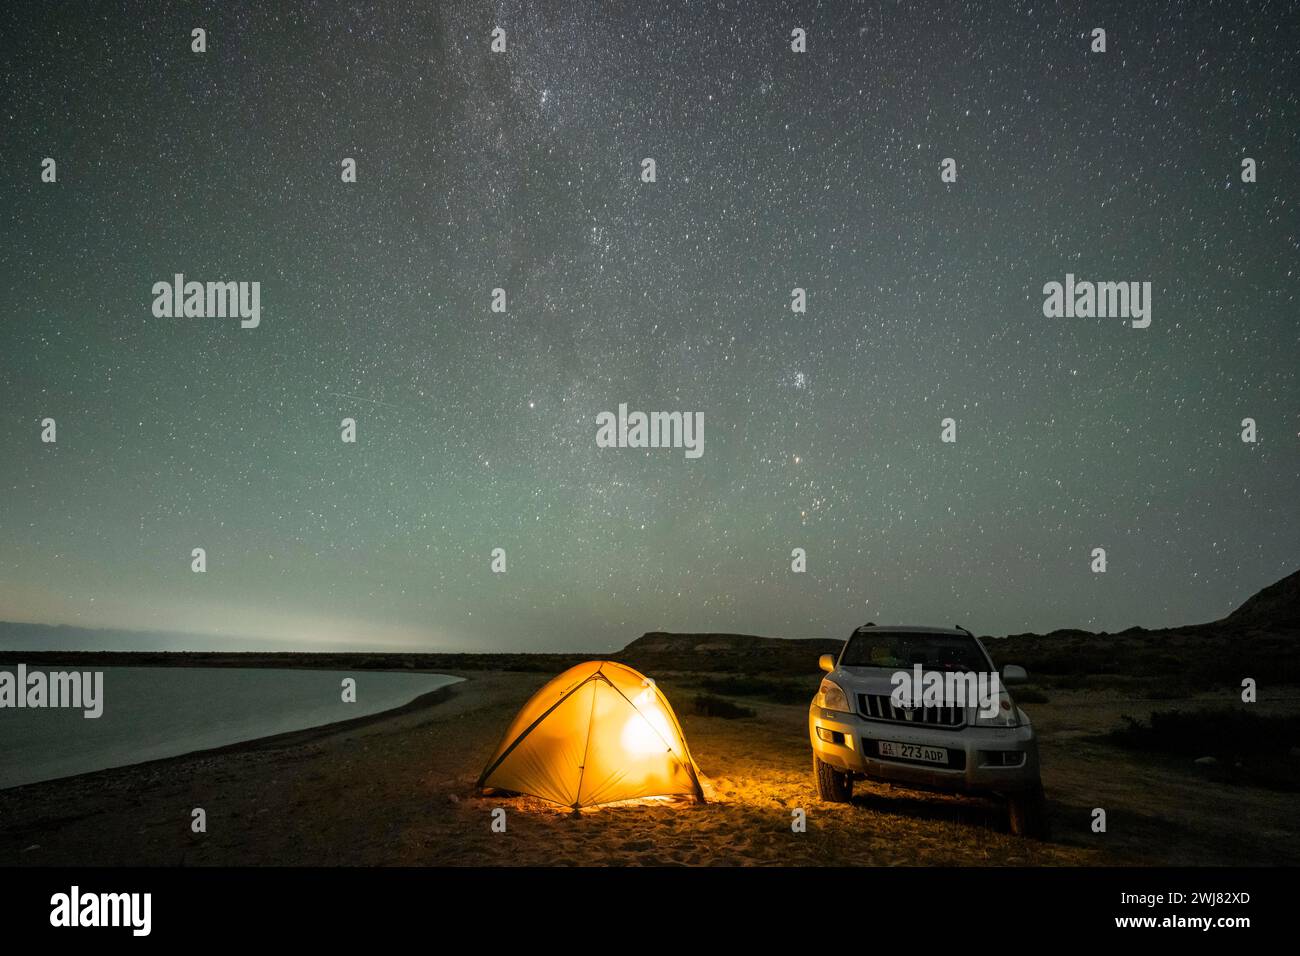 Veicolo fuoristrada e tenda, foto notturna, via Lattea sul lago Issyk Kul, Kirghizistan Foto Stock